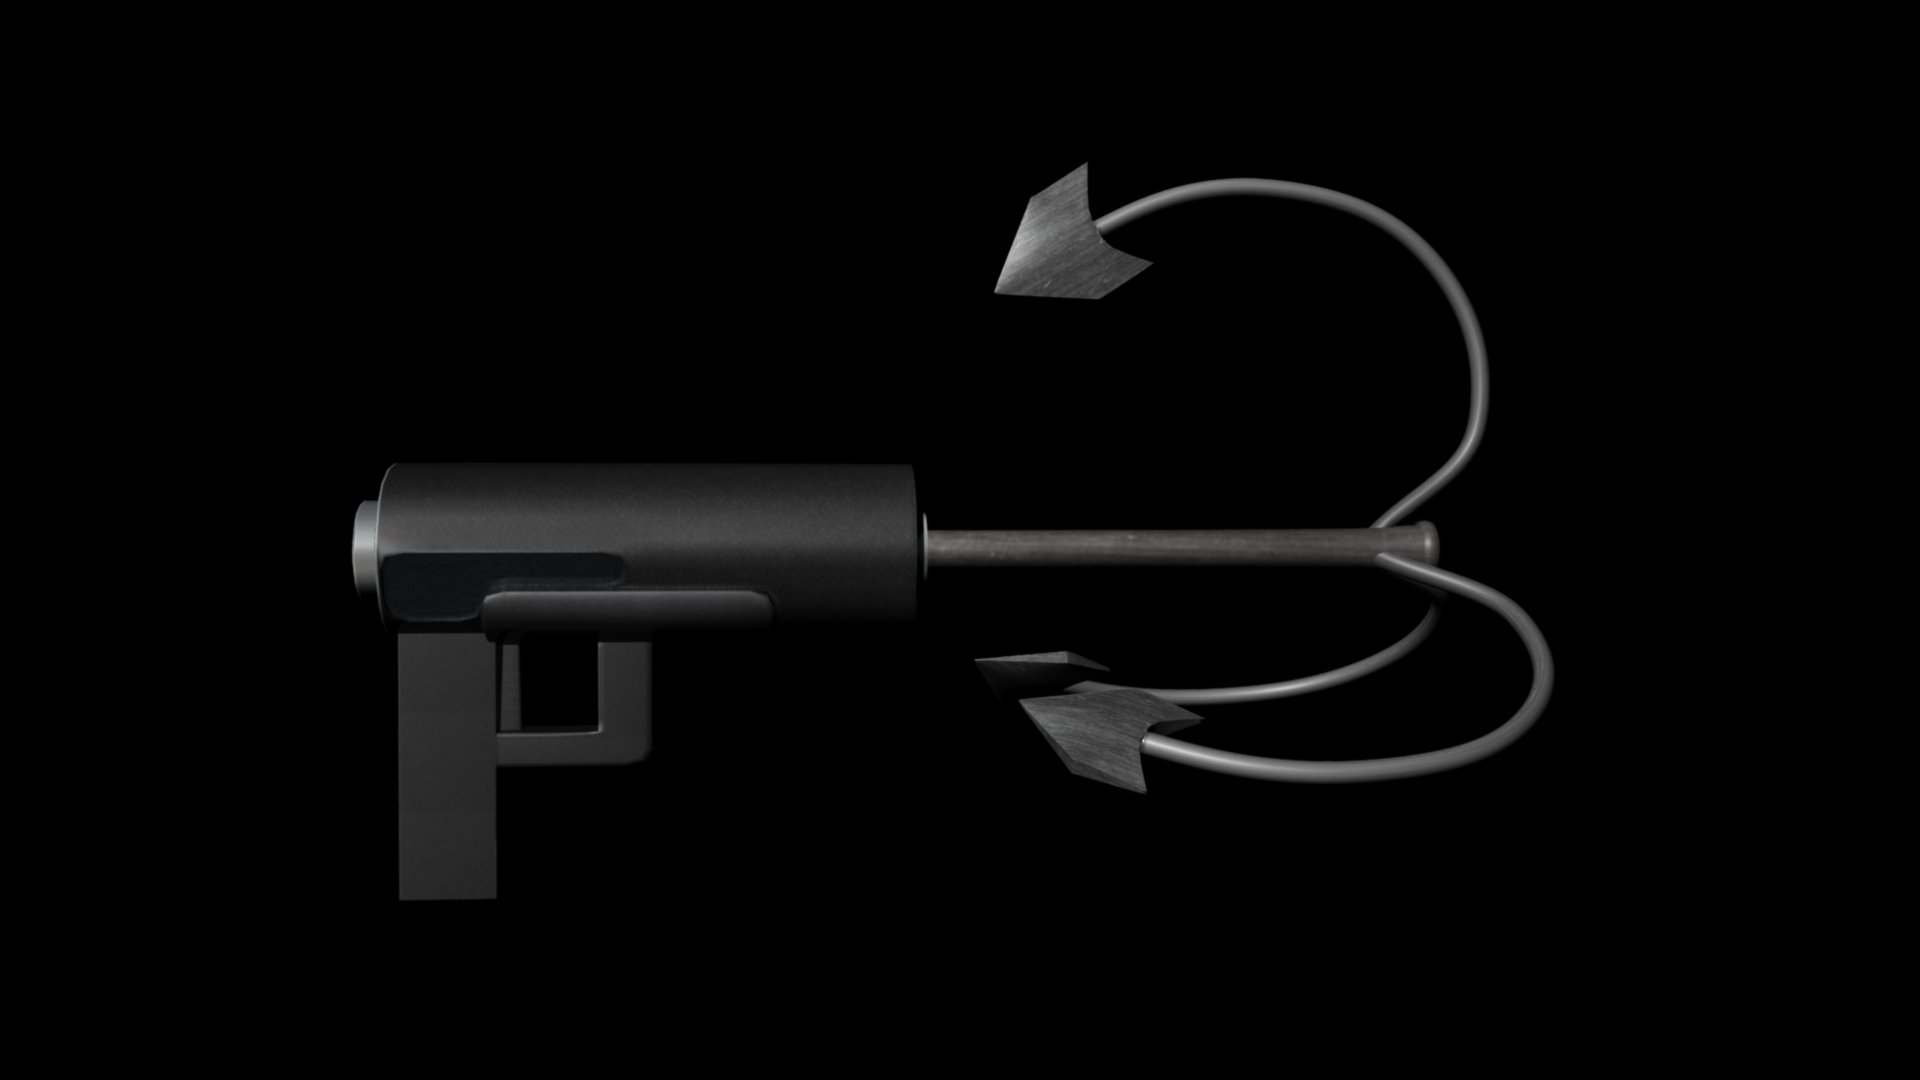 Rudy Harrelson II - Grappling Hook Gun Toy